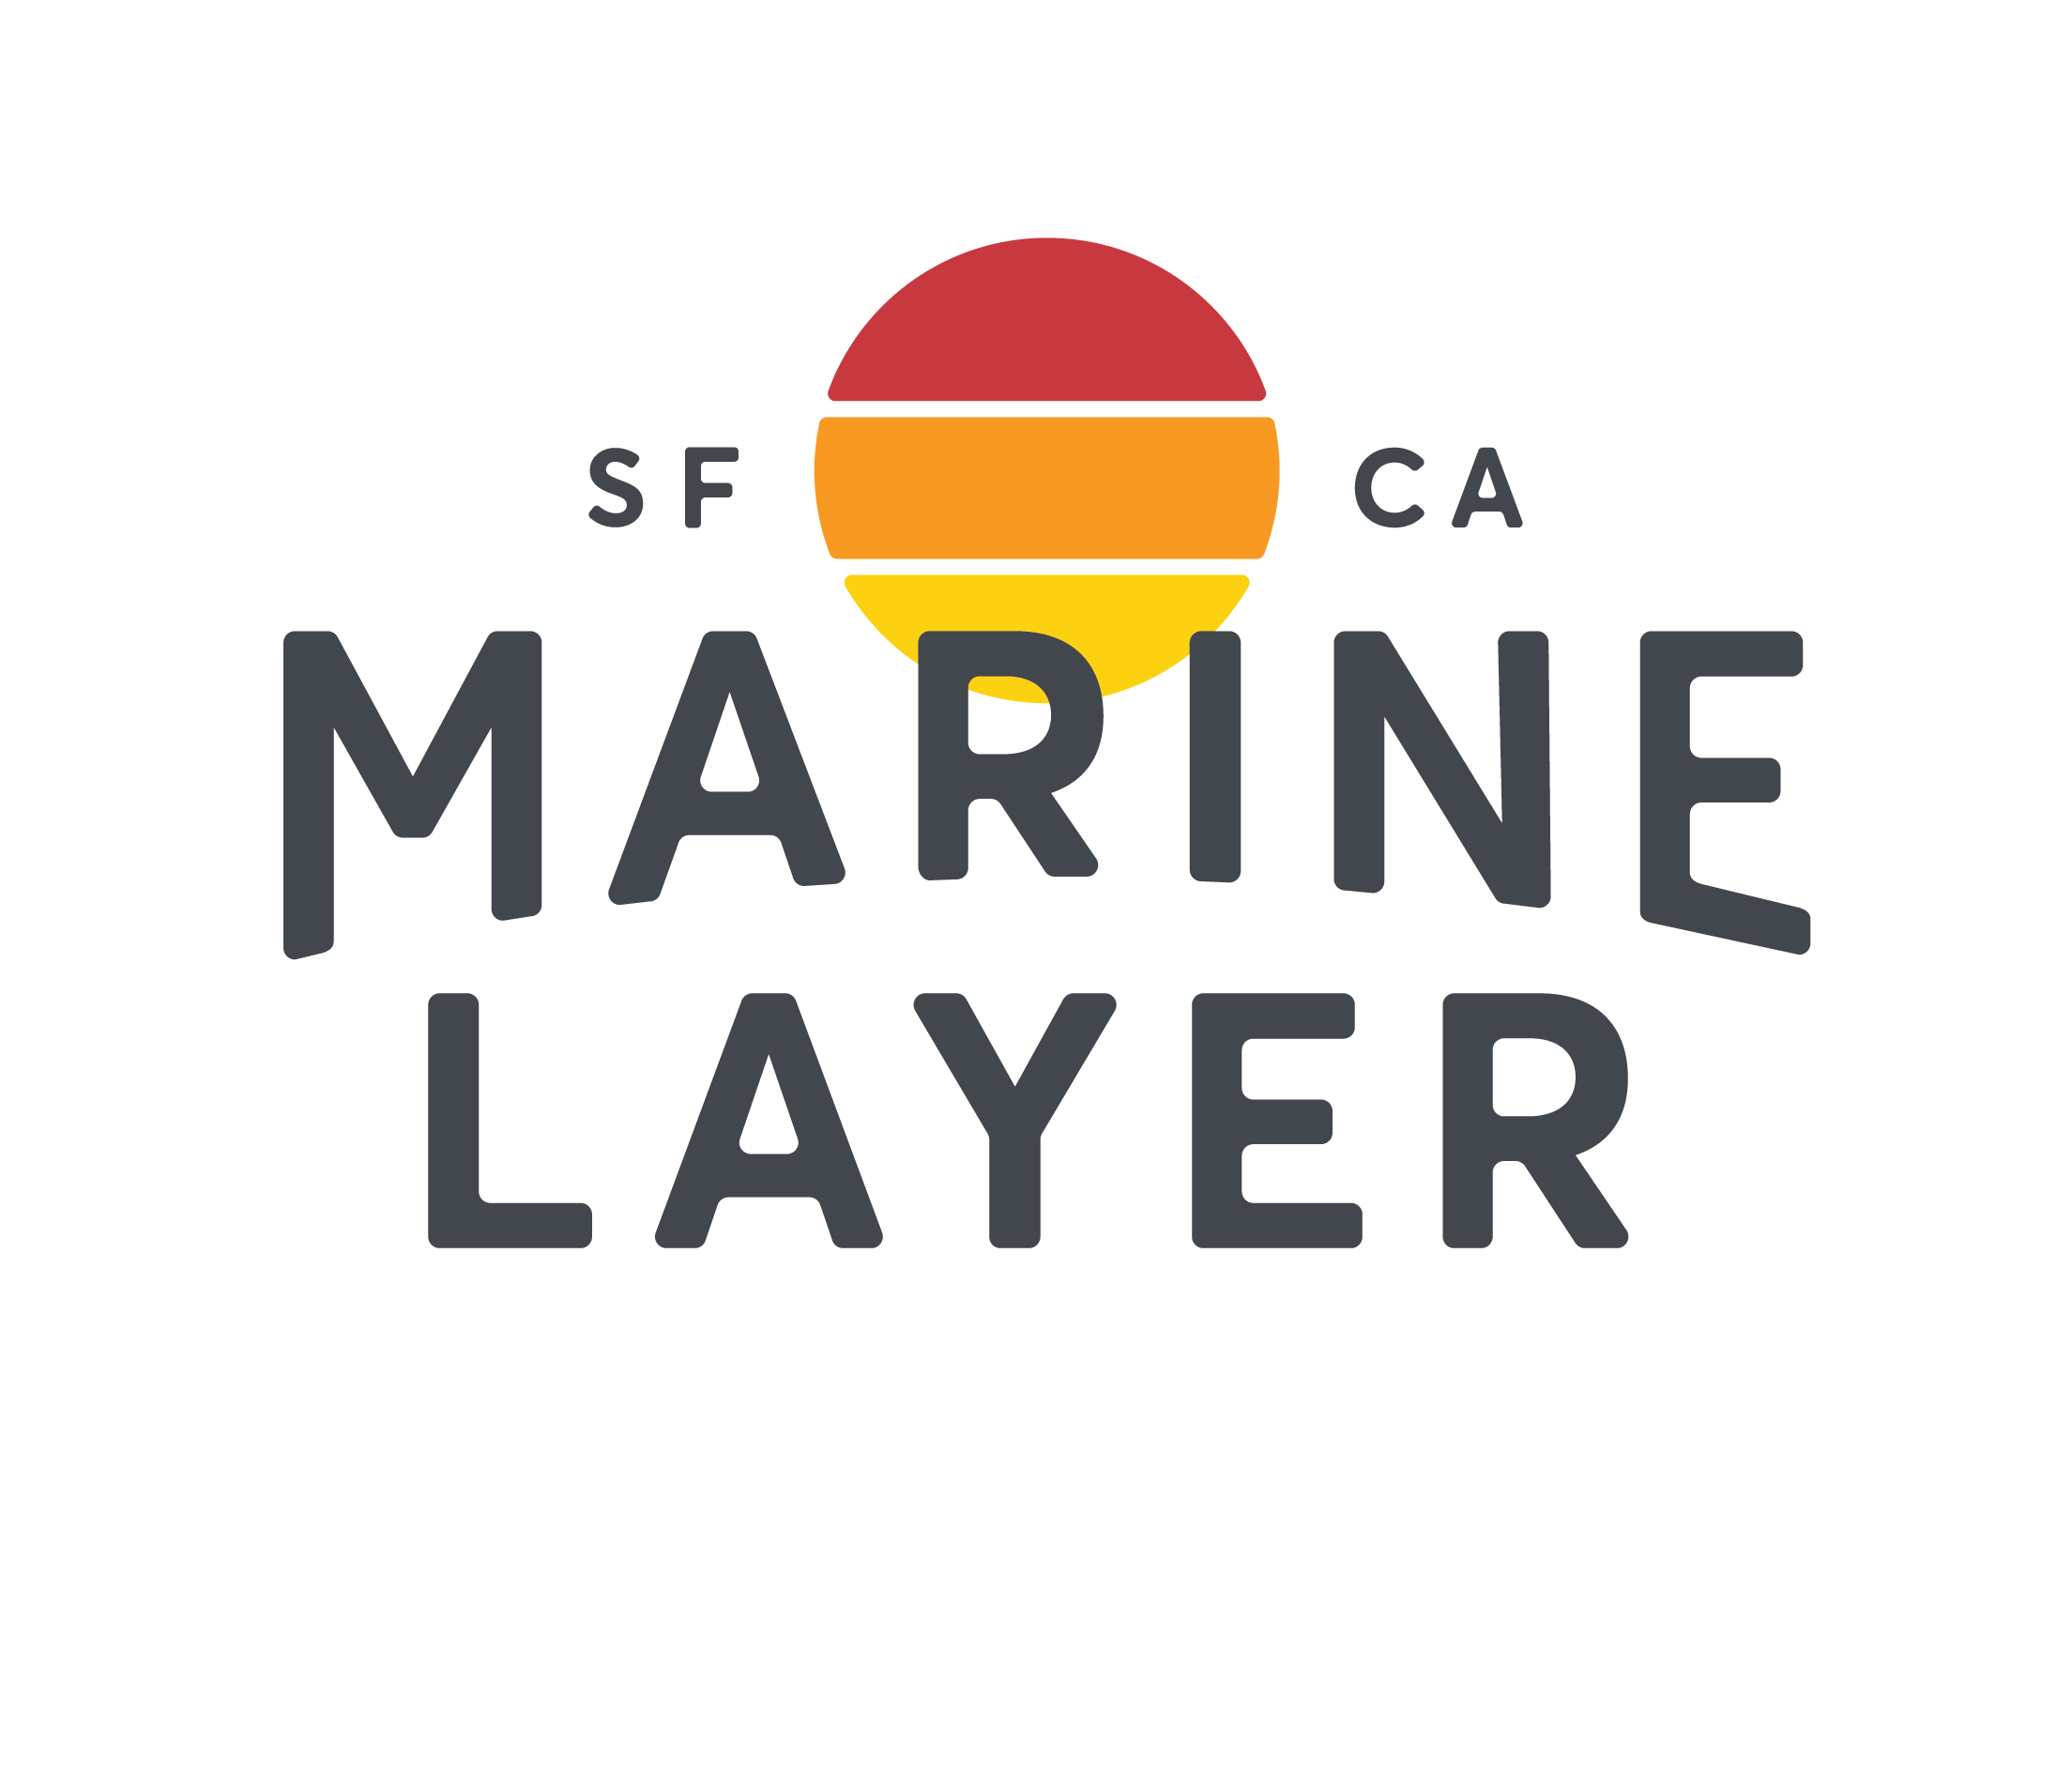 Marine Layer Coupon Codes